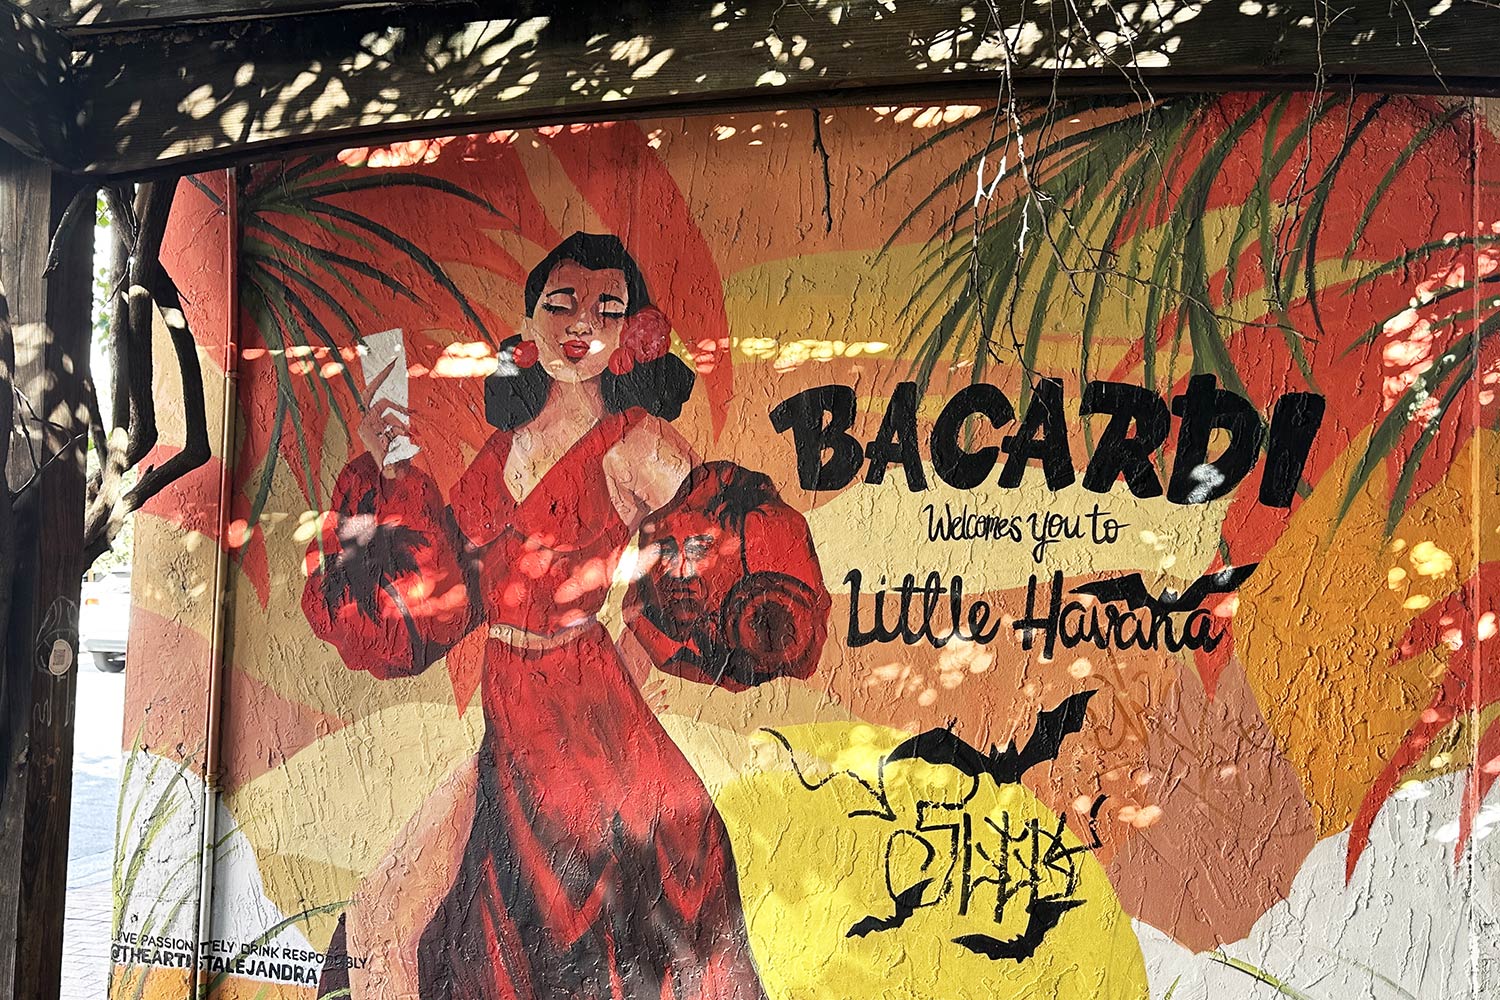 Little Havana in Miami